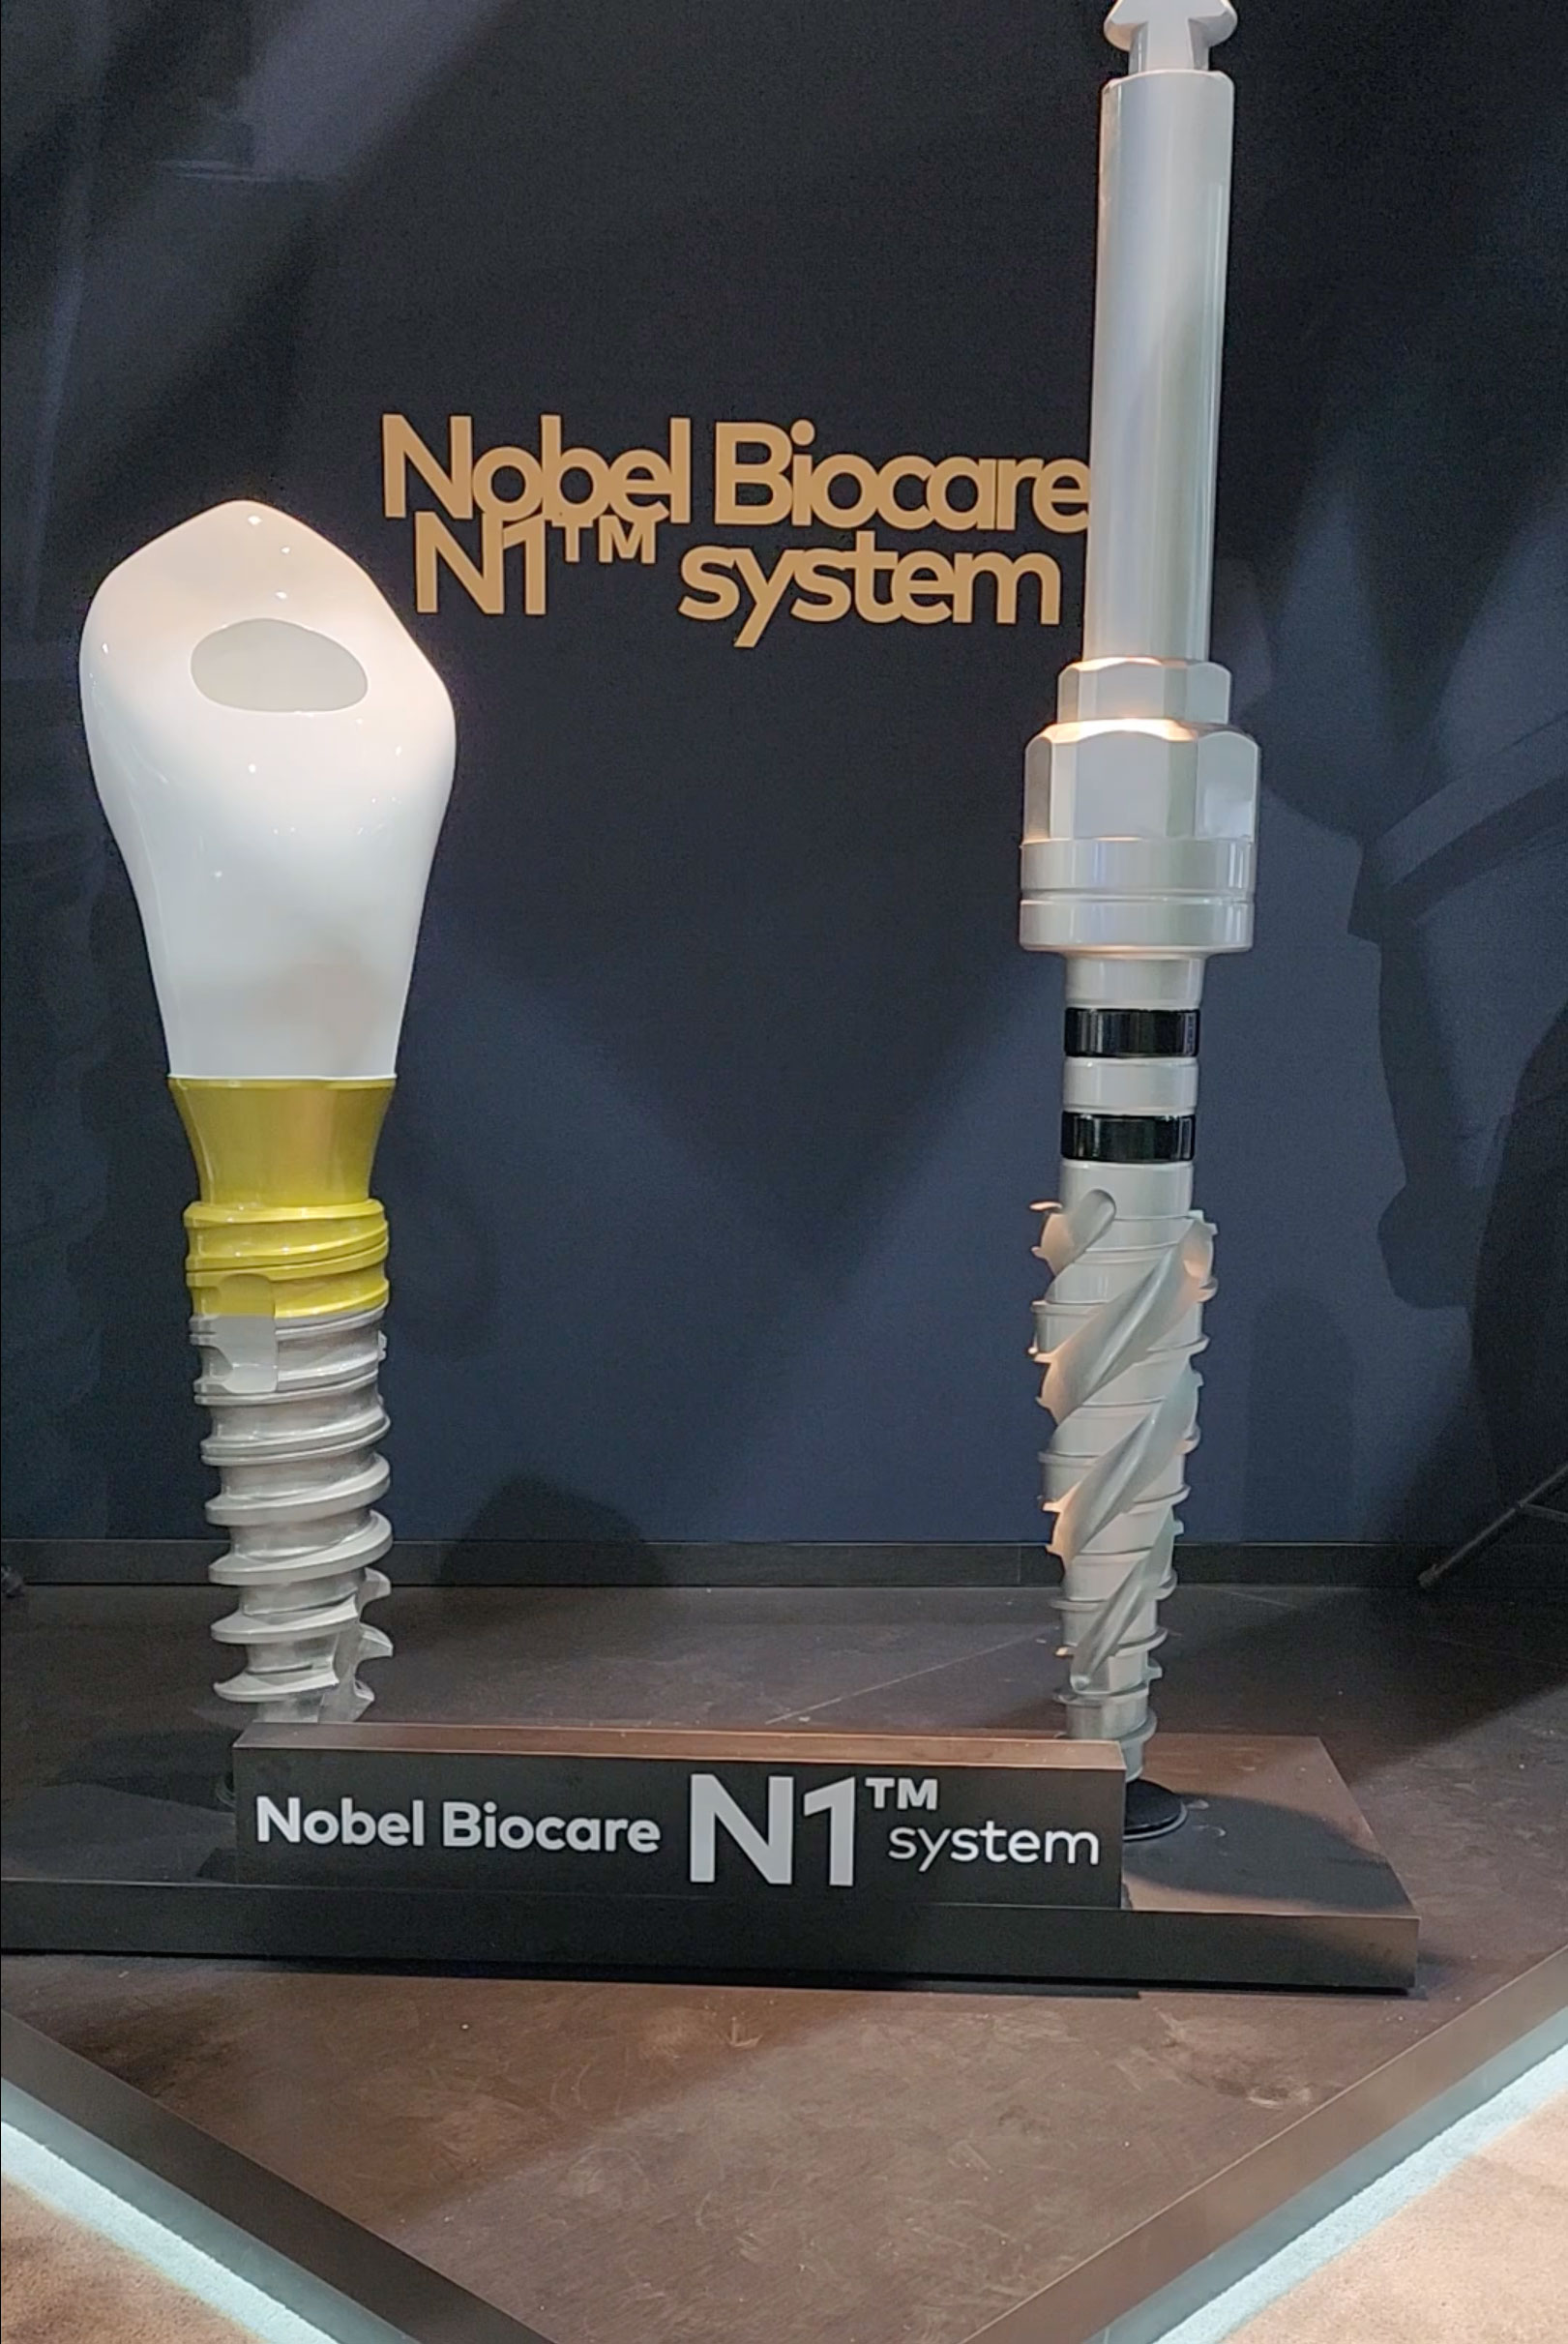 Nobel Biocare N1 System product replica model